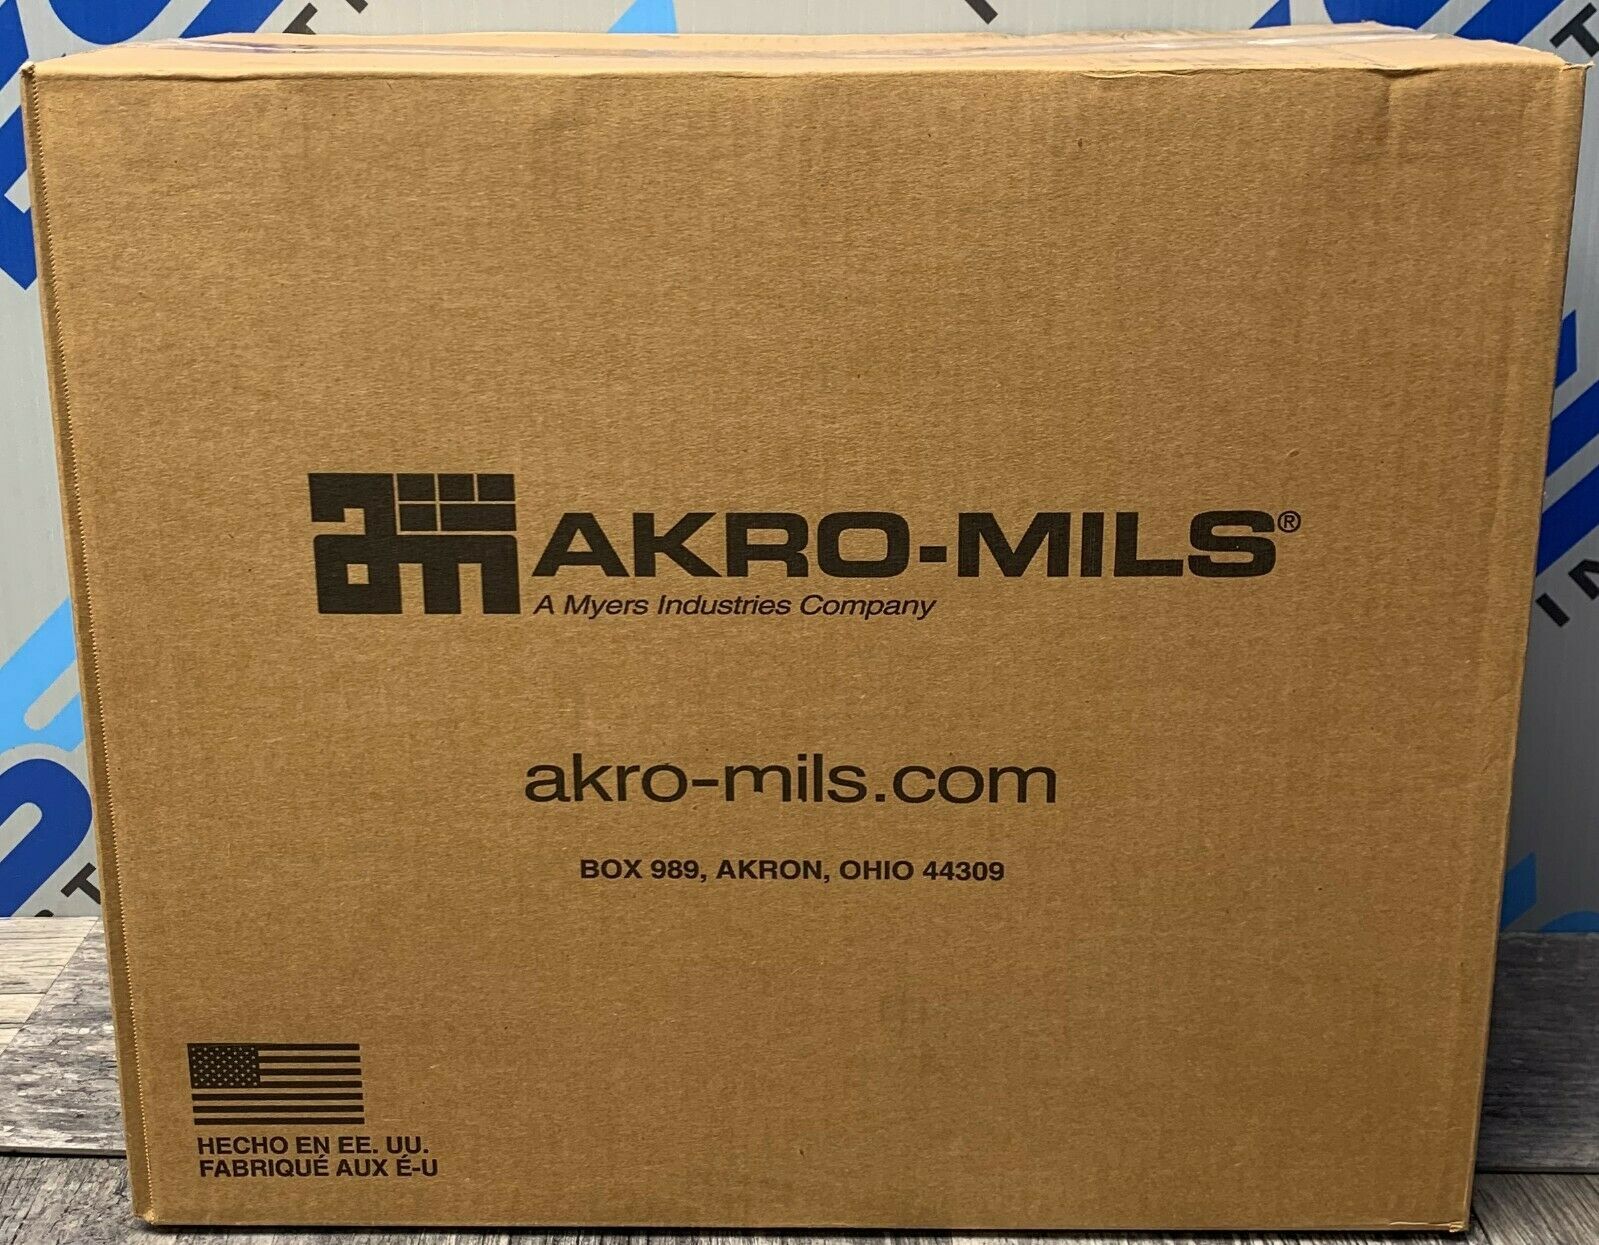 Akro-Mils 30220YELLO Material Handling | ESS INDUSTRIAL